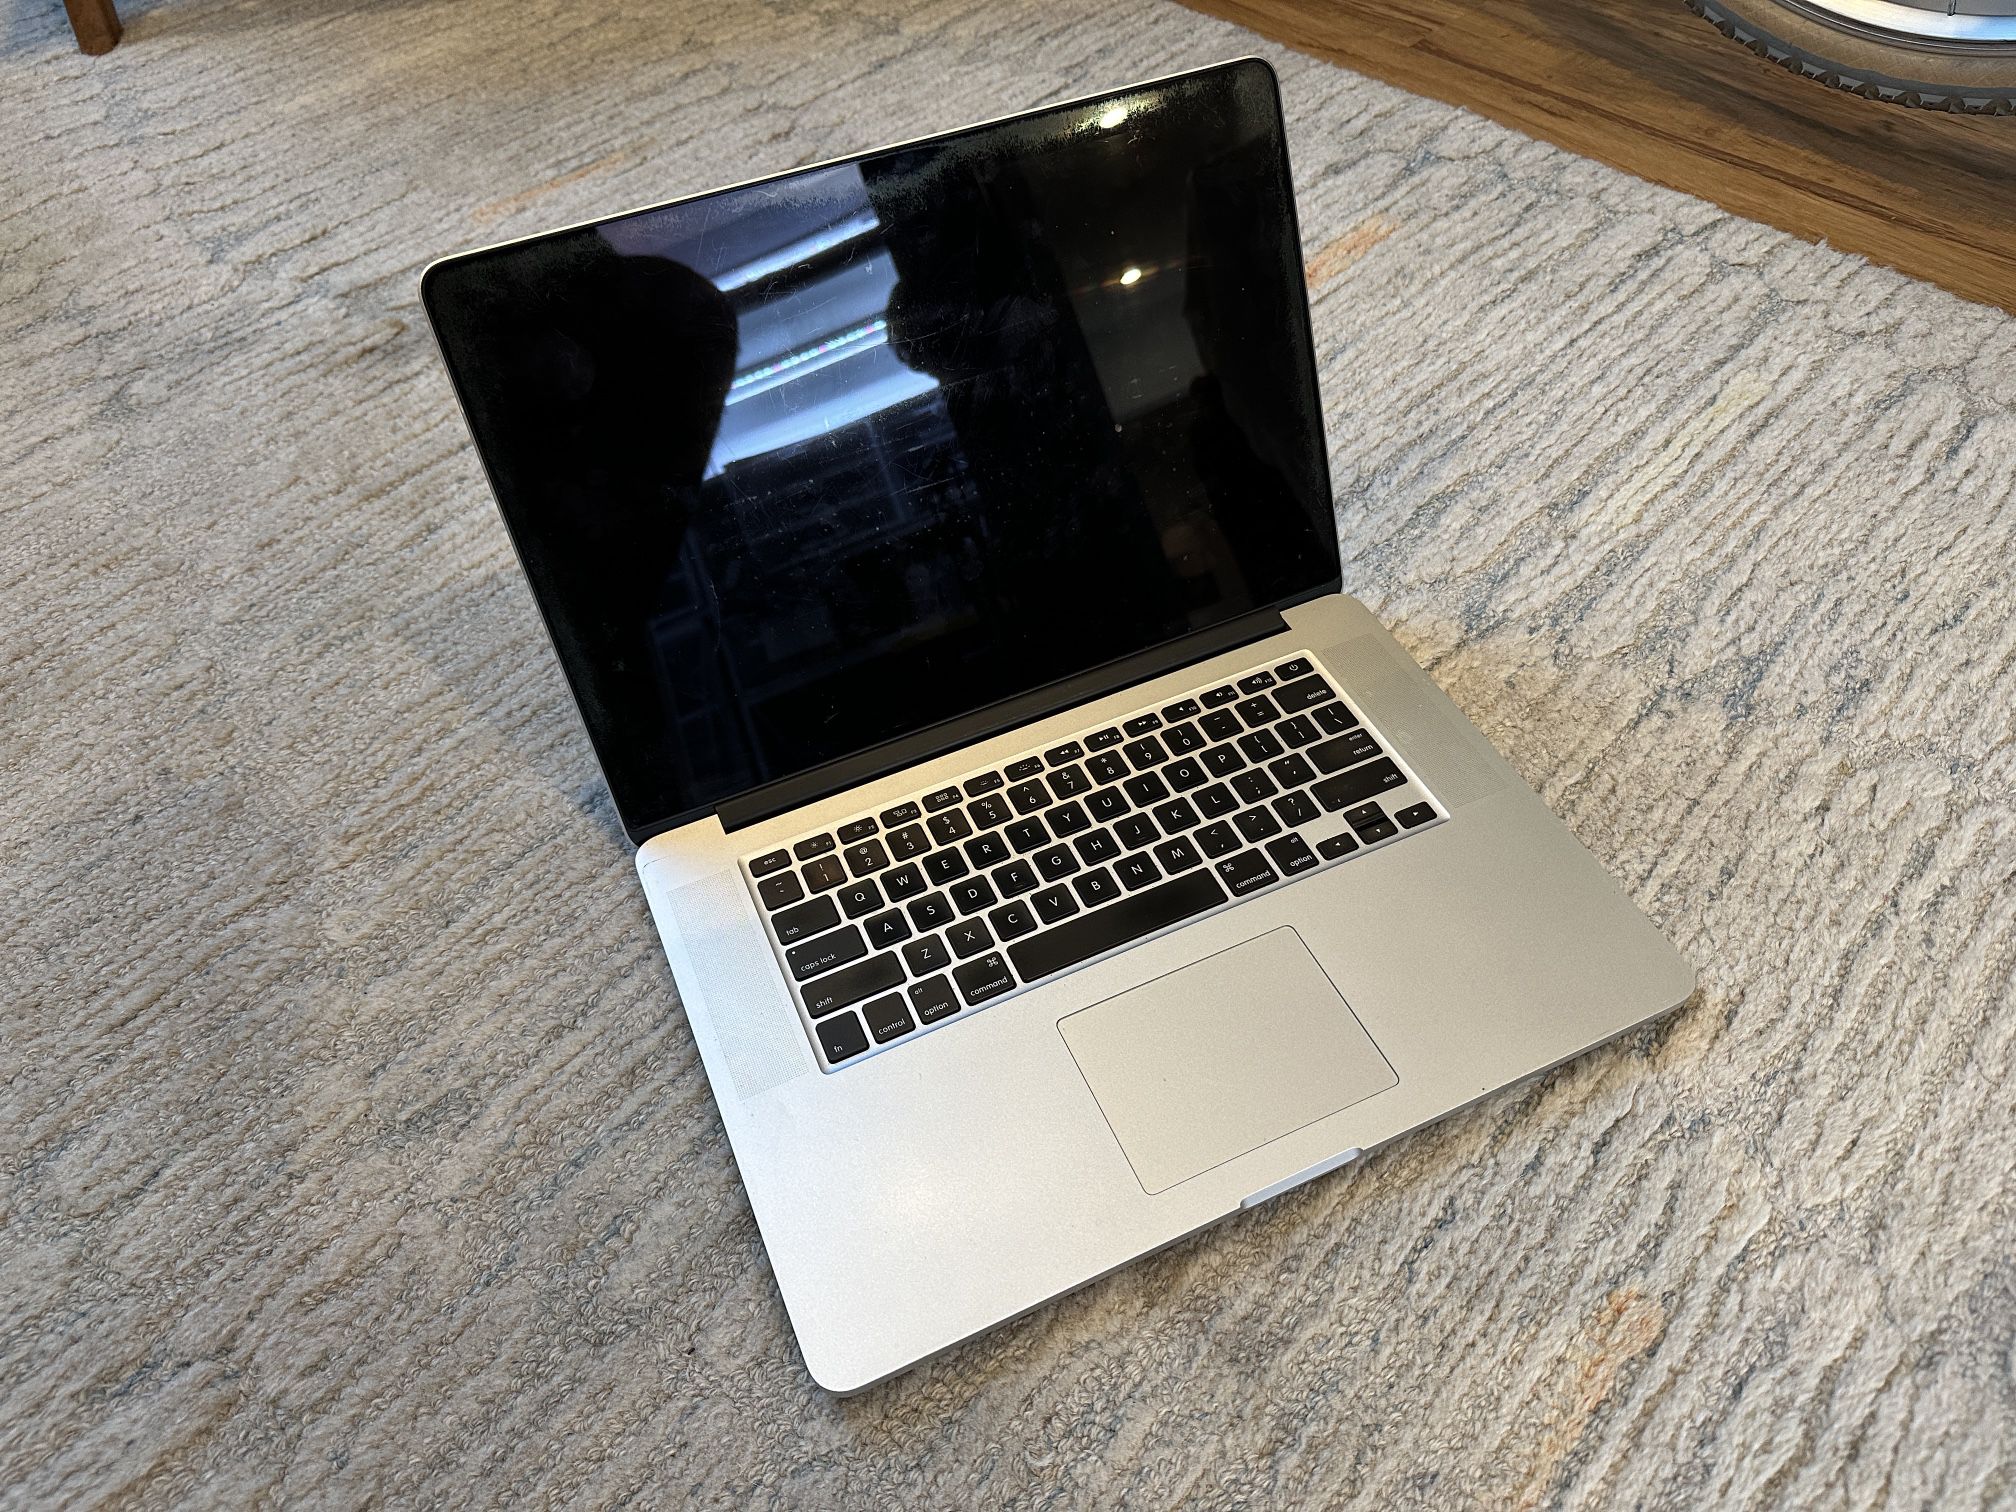 Apple MacBook Pro 15” For Parts